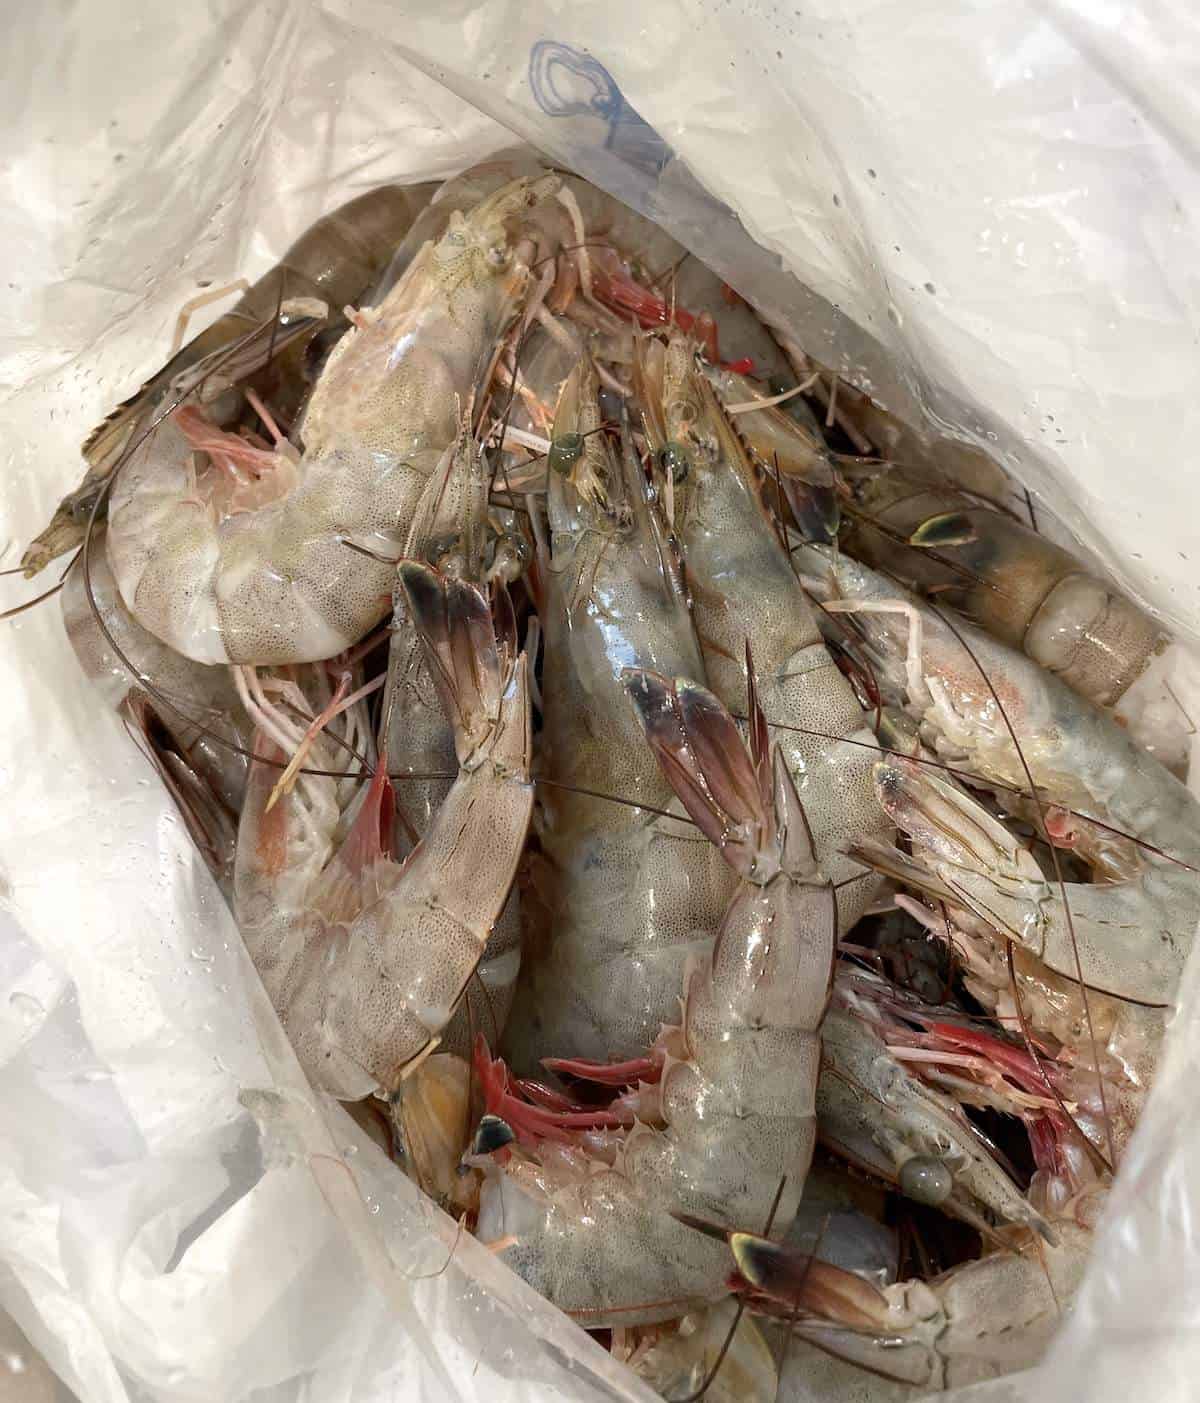 A bag of raw jumbo gulf shrimp.